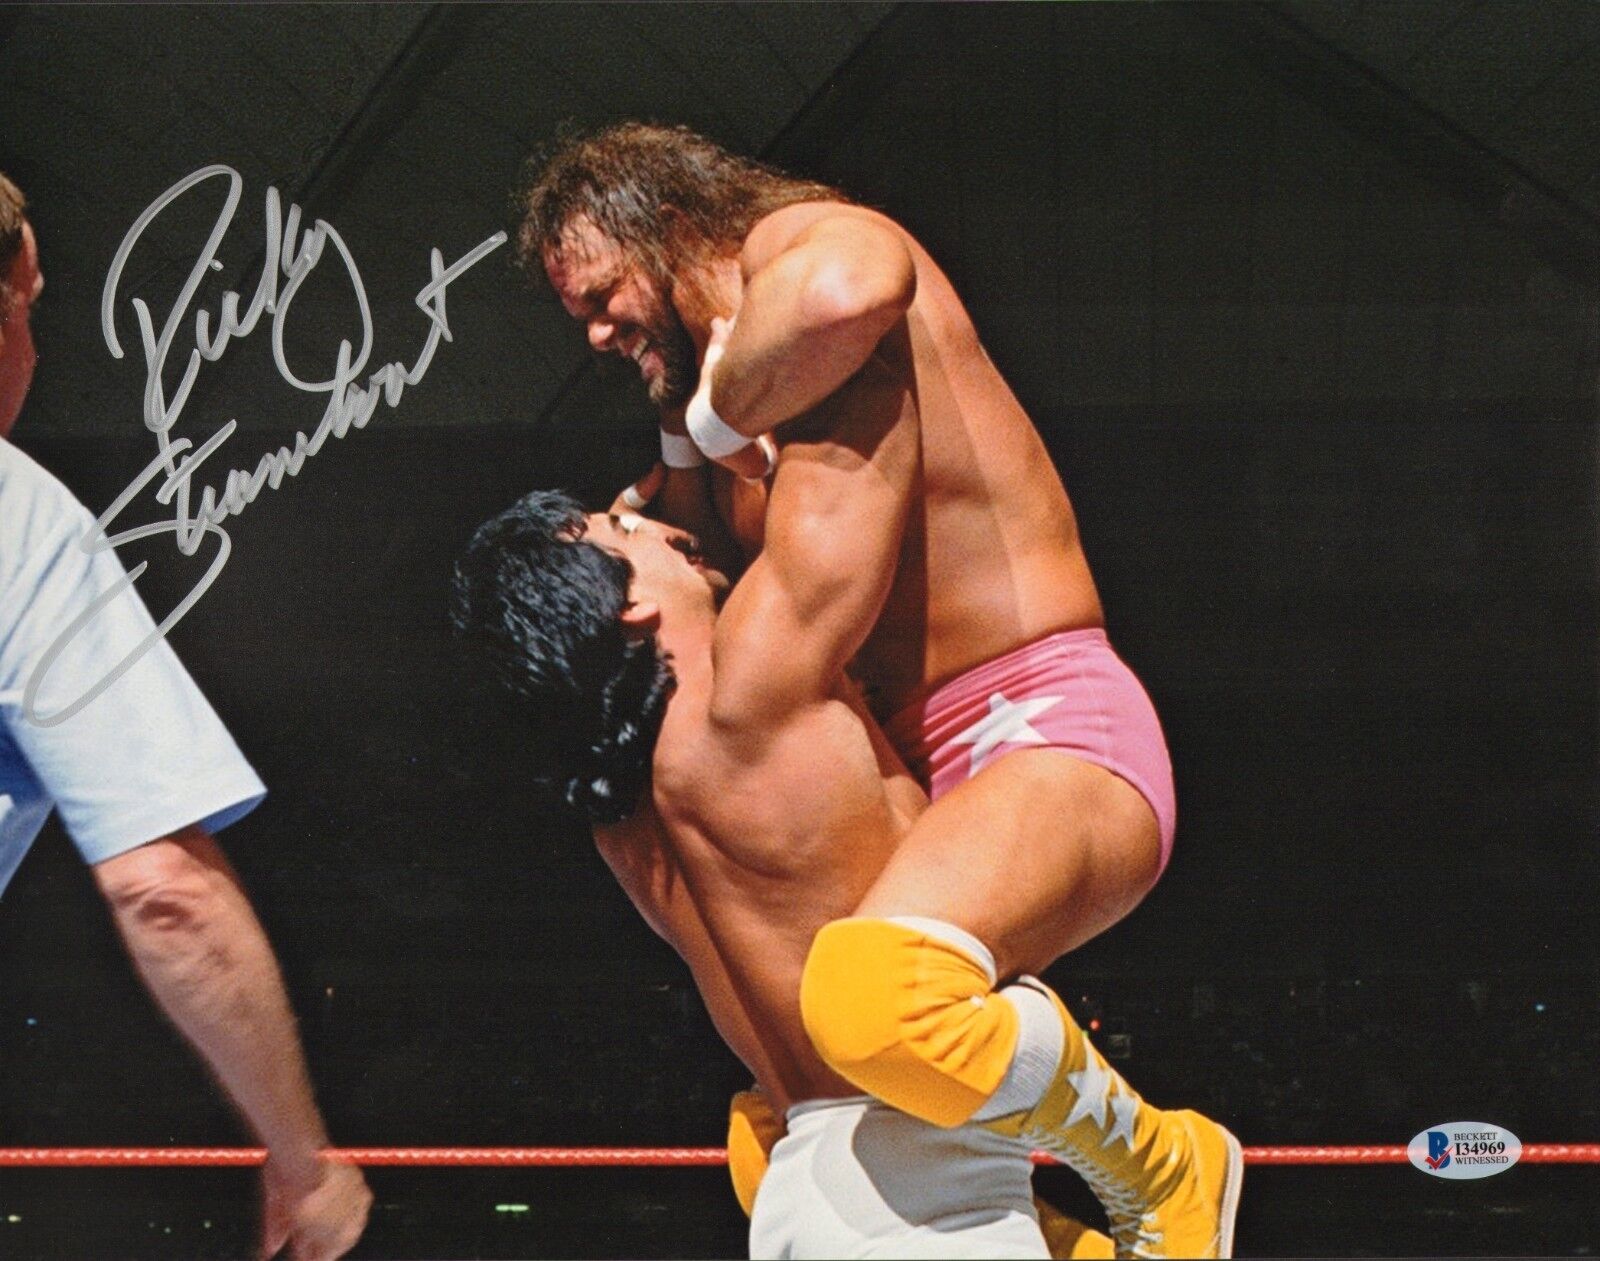 Ricky Steamboat Signed WWE 11x14 Photo Poster painting BAS COA Wrestlemania 3 v Macho Man Savage